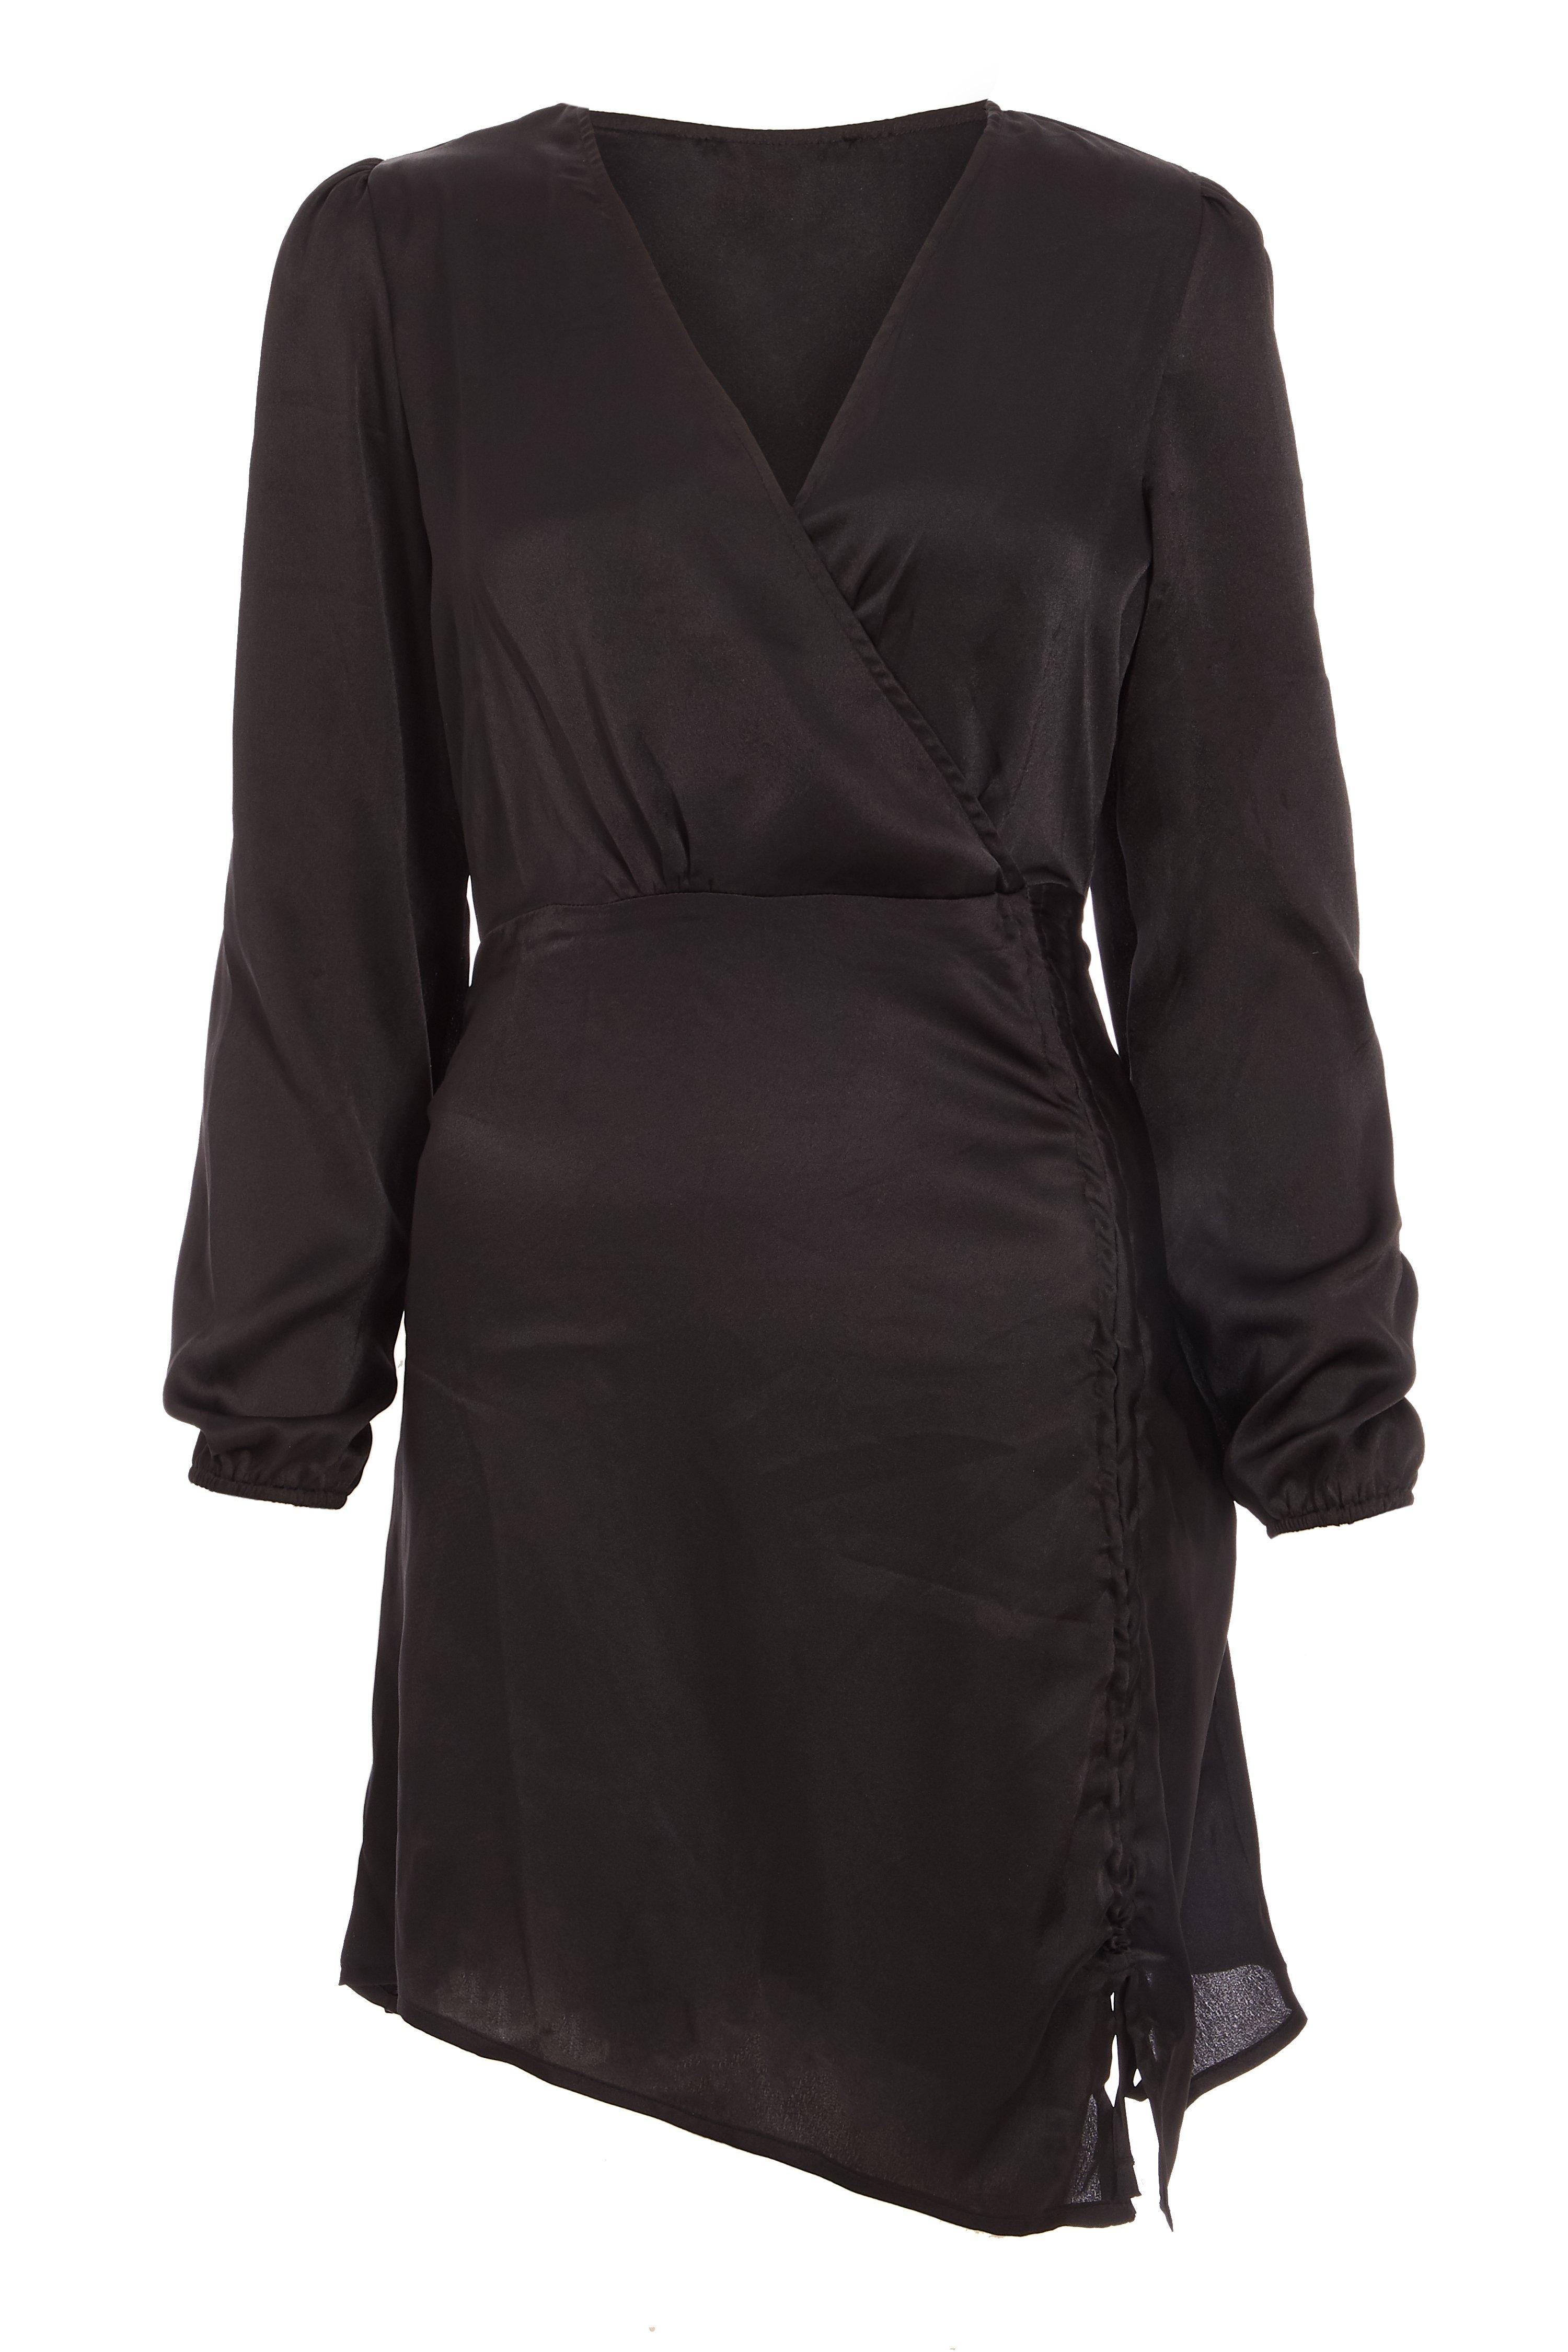 Black Satin Ruched Dress - Quiz Clothing